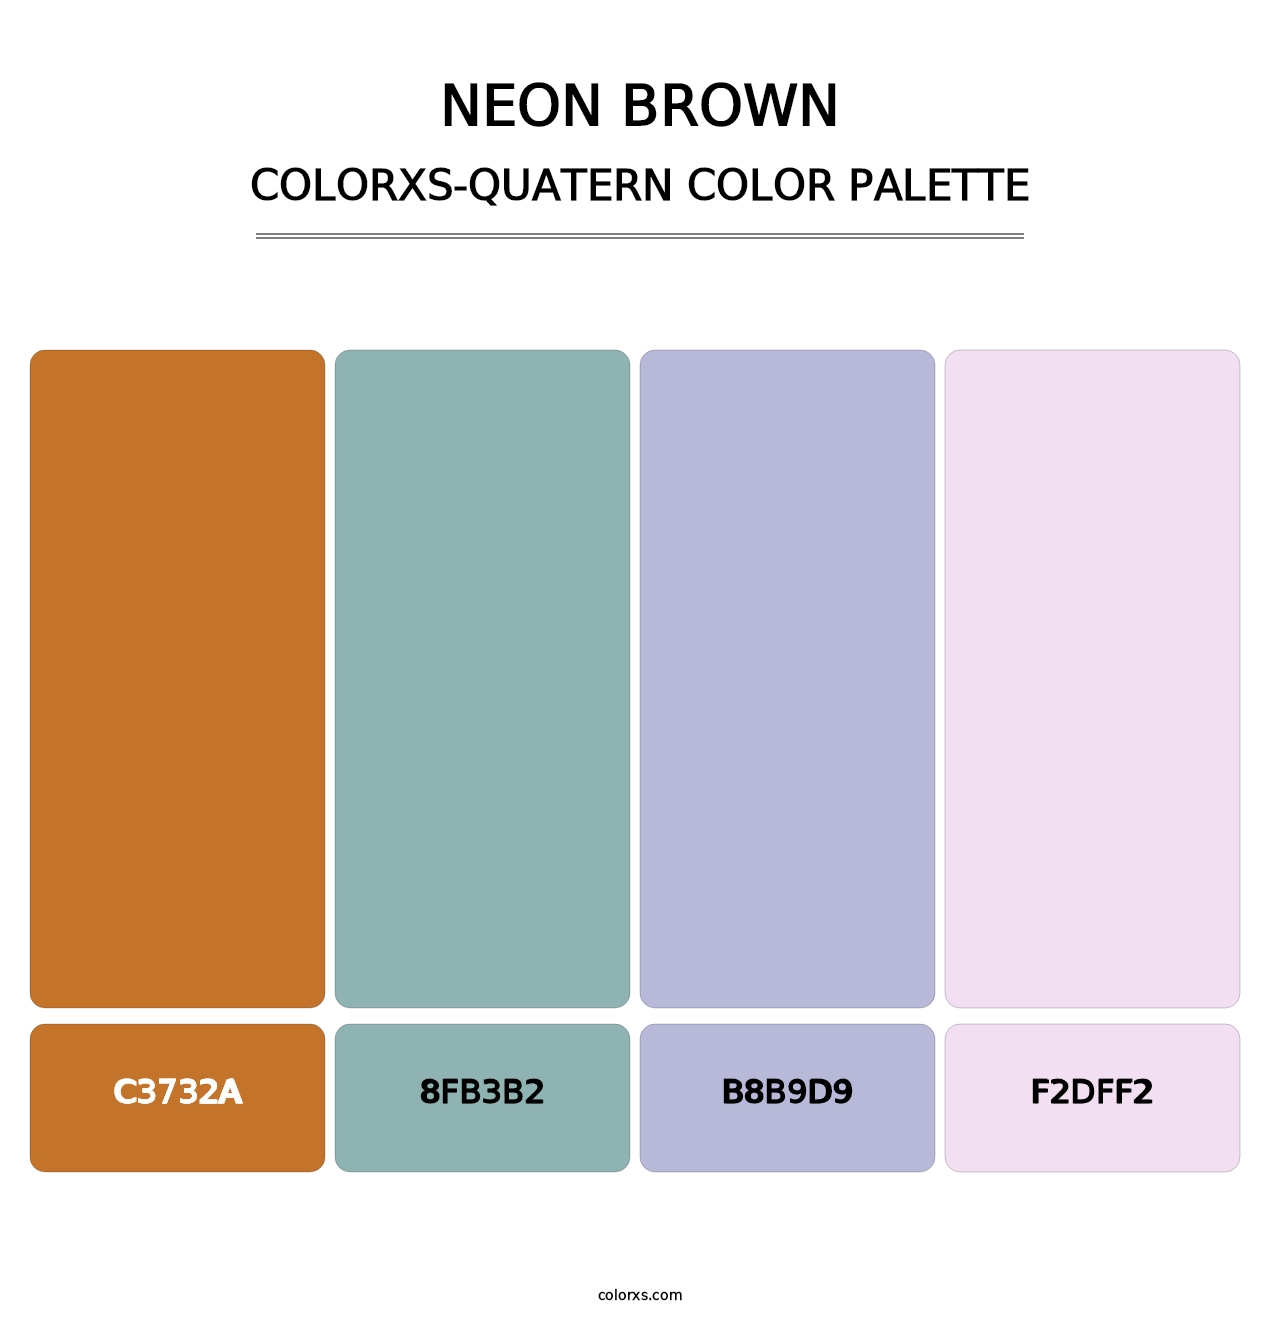 Neon Brown - Colorxs Quatern Palette